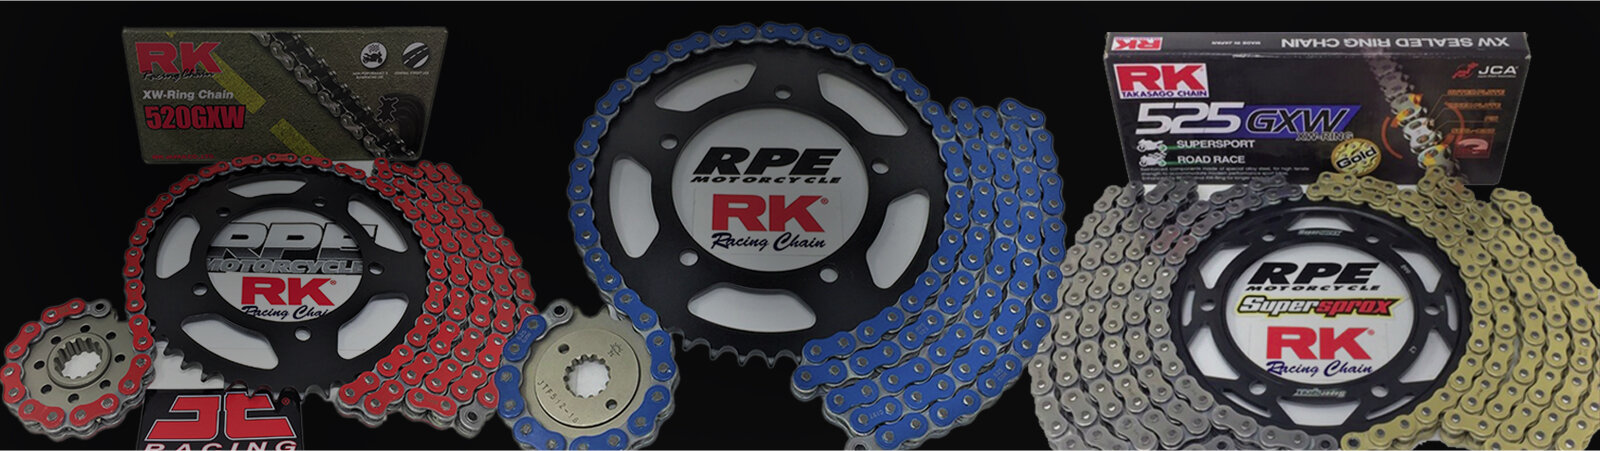 RK Racing Chain 2067-930WG Steel Rear Sprocket and GB530XSOZ1 Chain 20,000 Mile Warranty Kit 